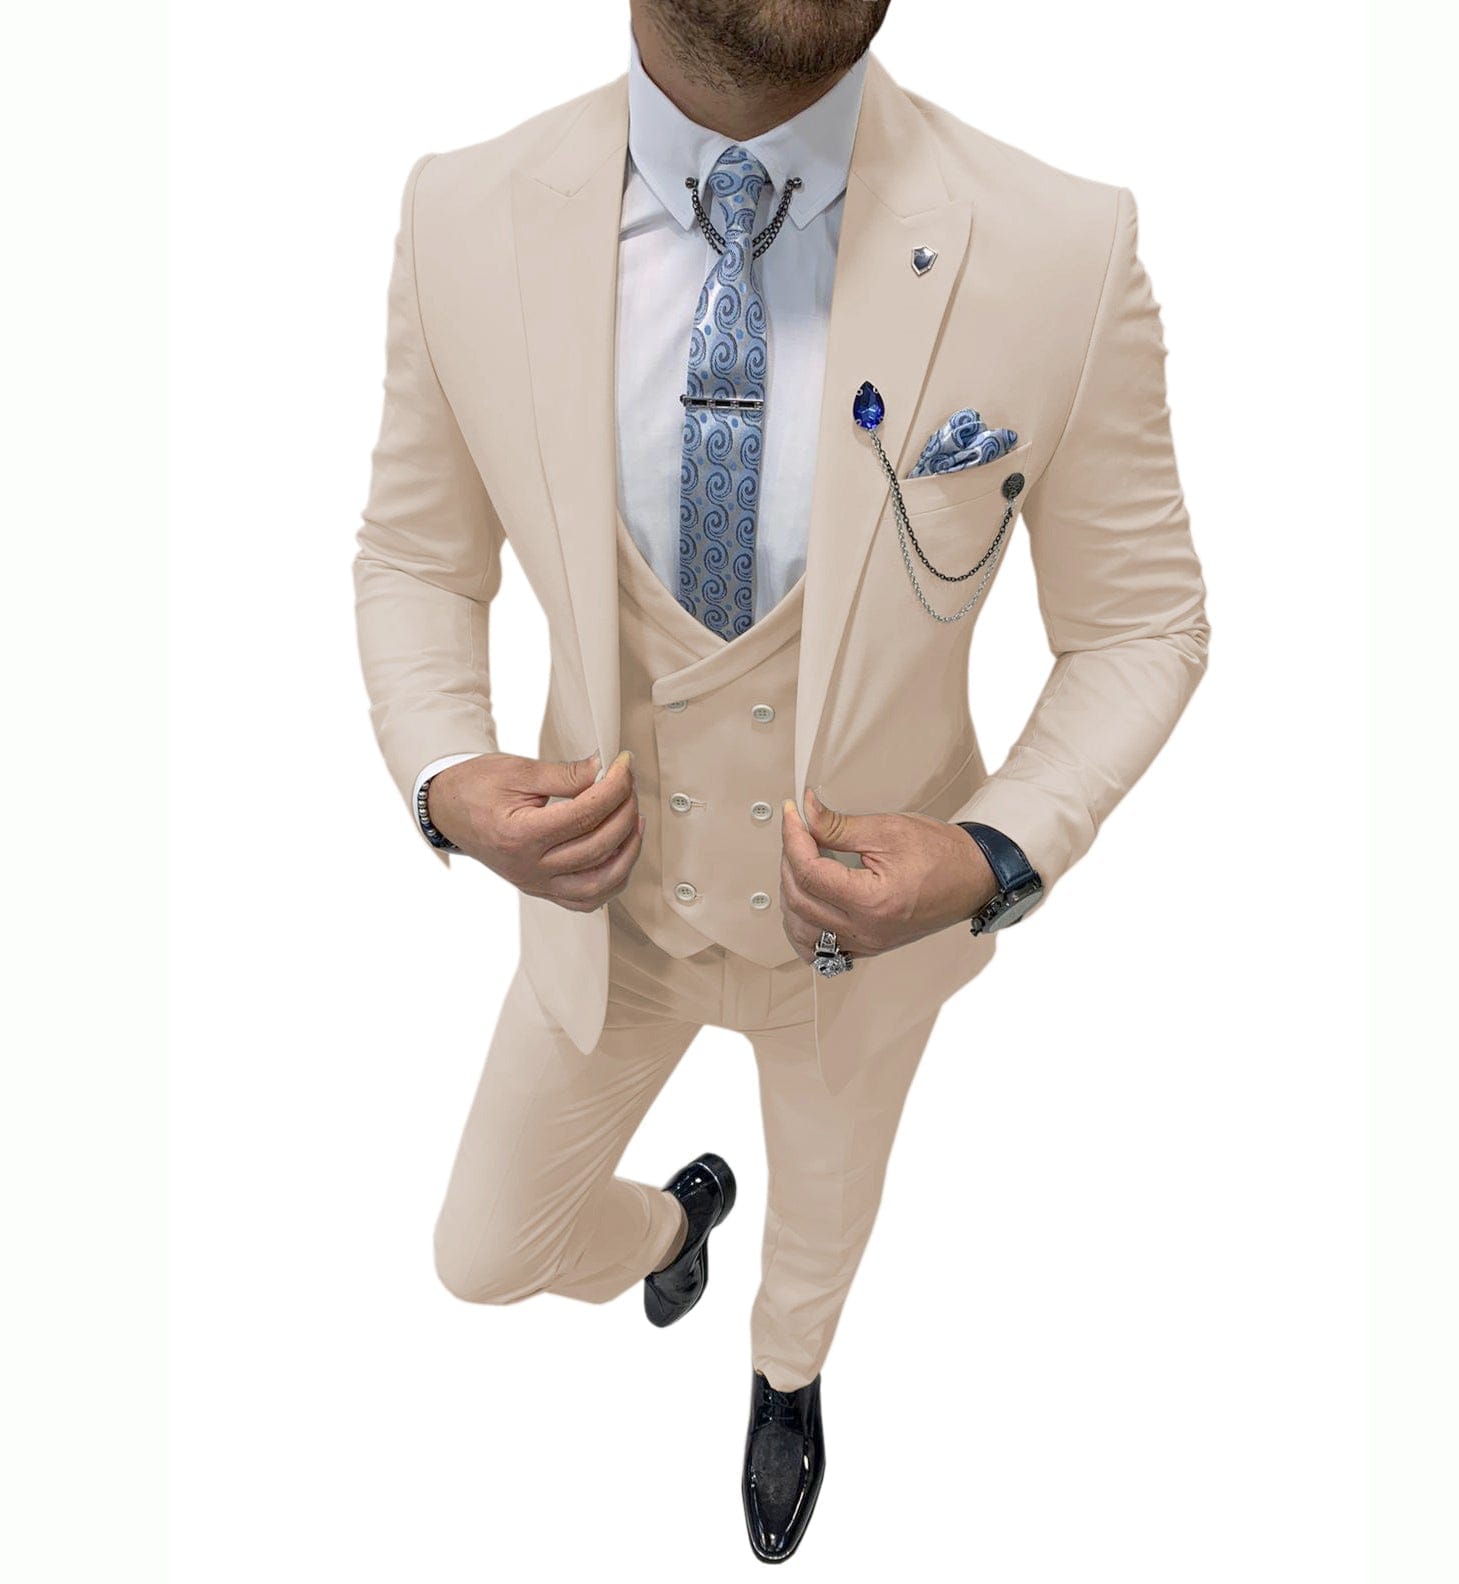 ceehuteey Mens Formal Suits Slim Fit, Peak Lapel 3 Piece Suits for Wedding